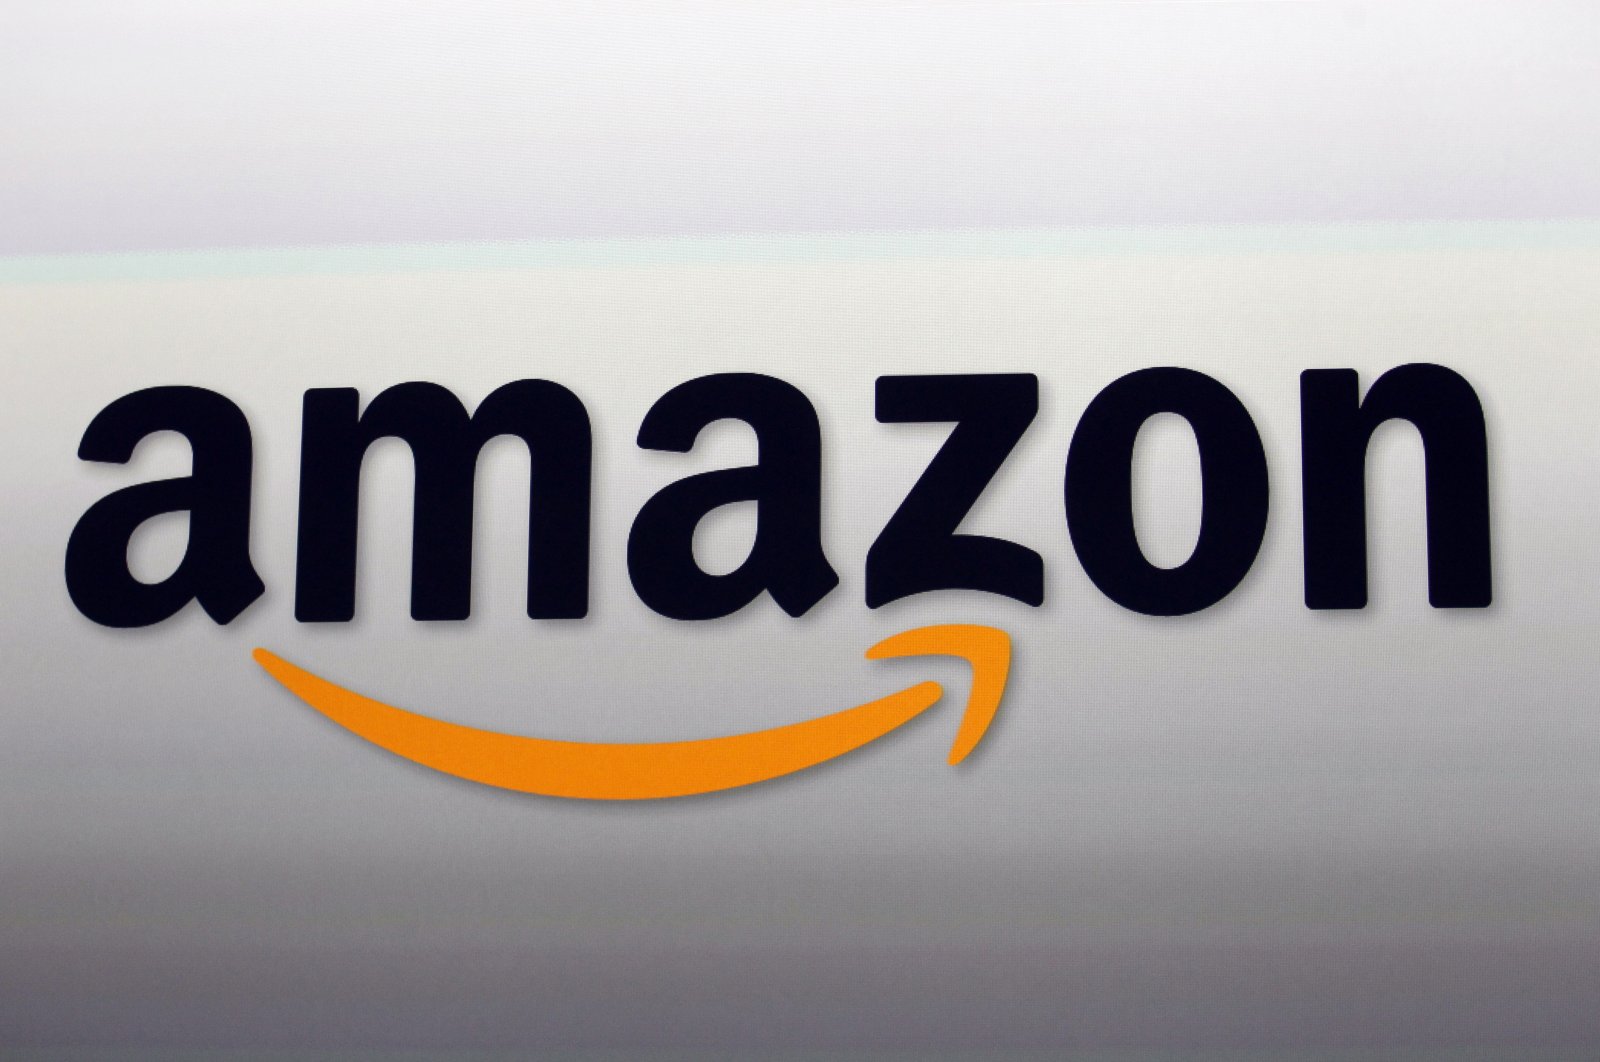 Staf Amazon Inggris berhenti bekerja sebagai protes atas kenaikan gaji yang tidak mencukupi